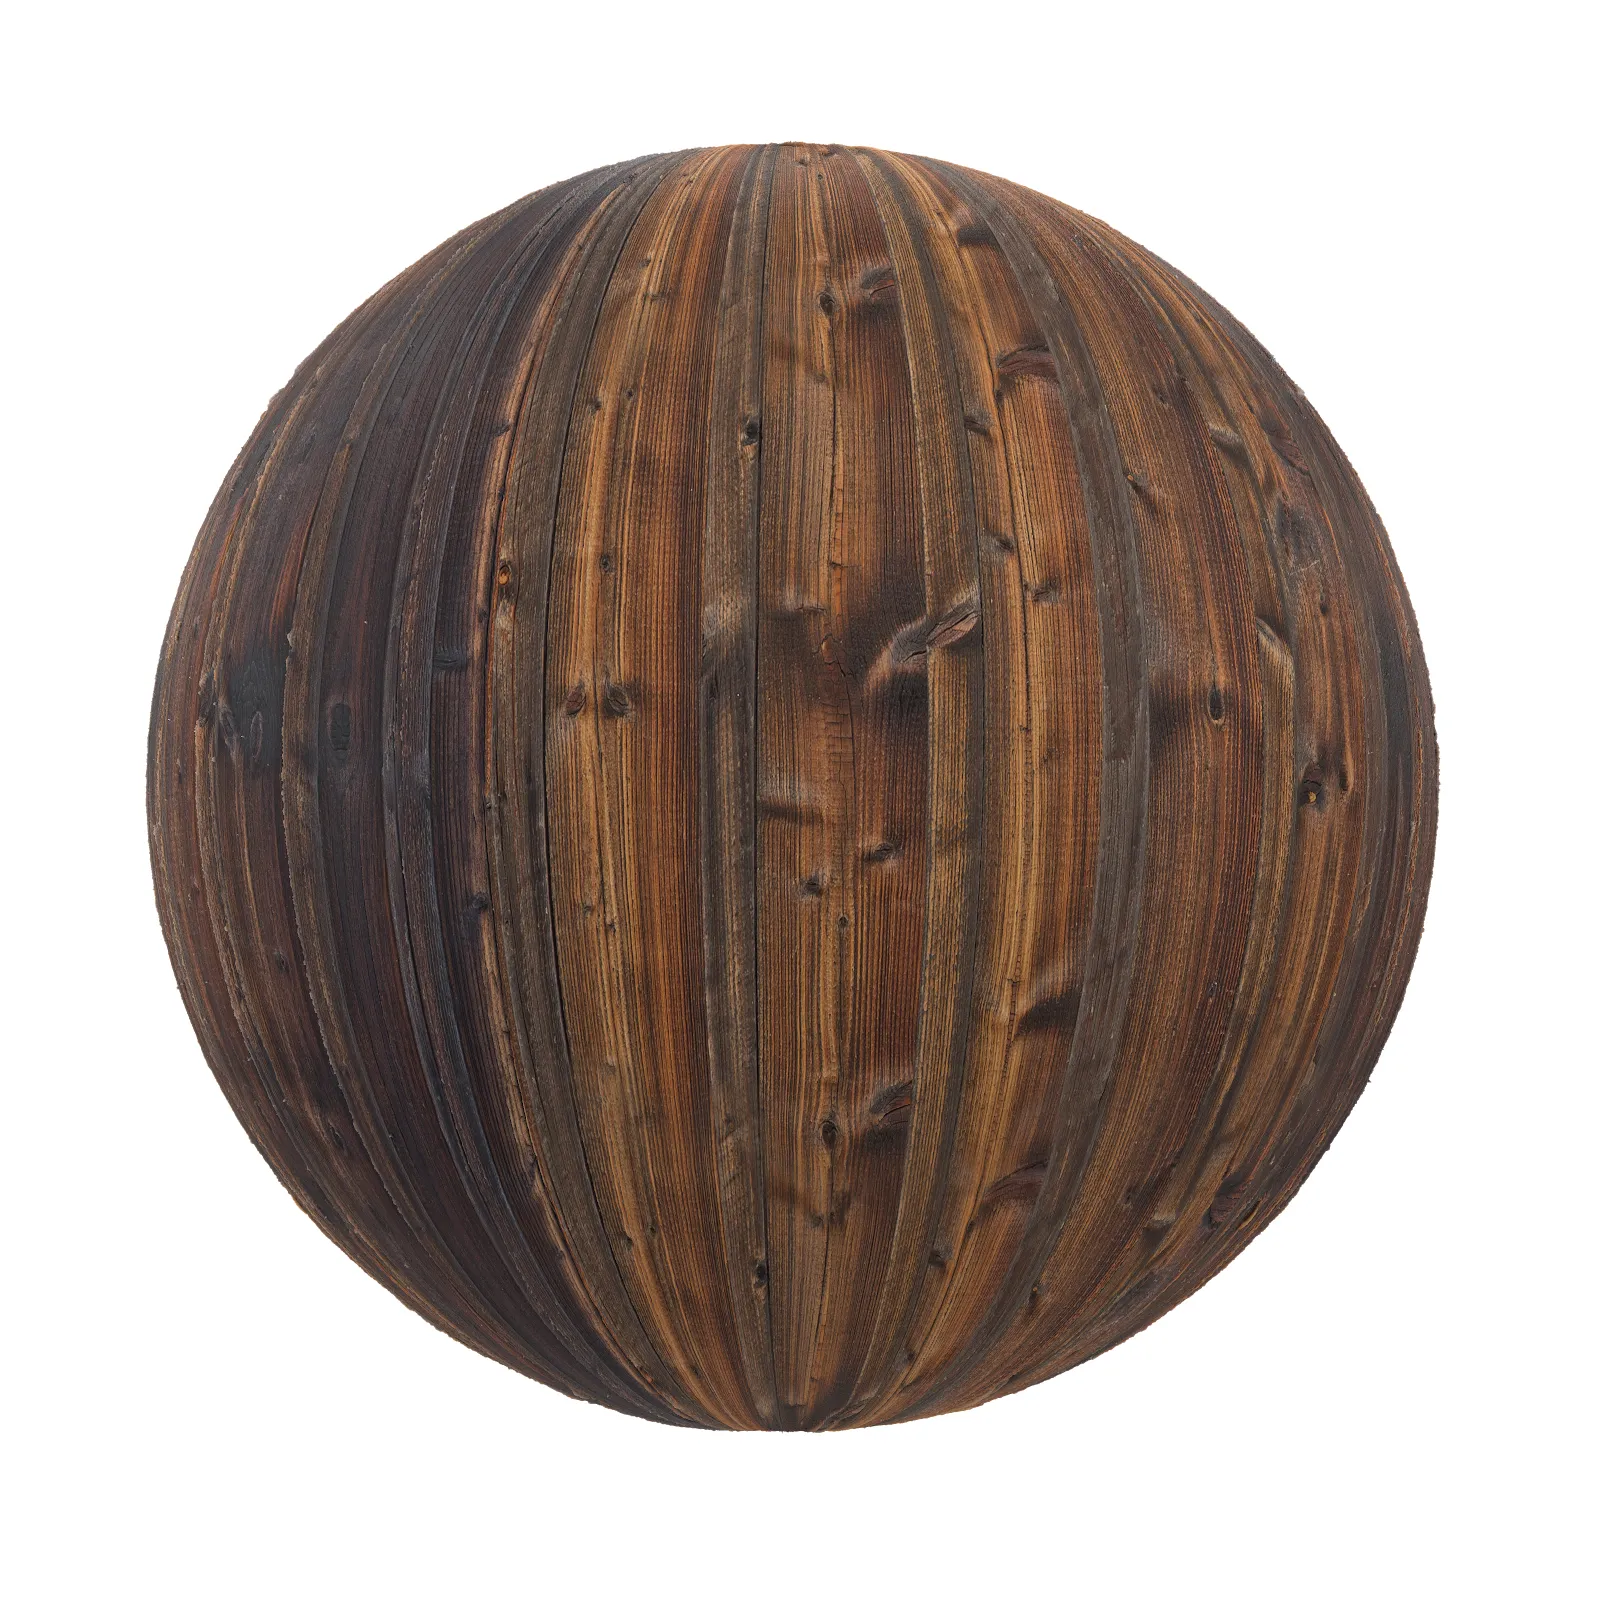 3ds Max Files – Texture – 8 – Wood Texture – 104 – Wood Texture by Minh Nguyen